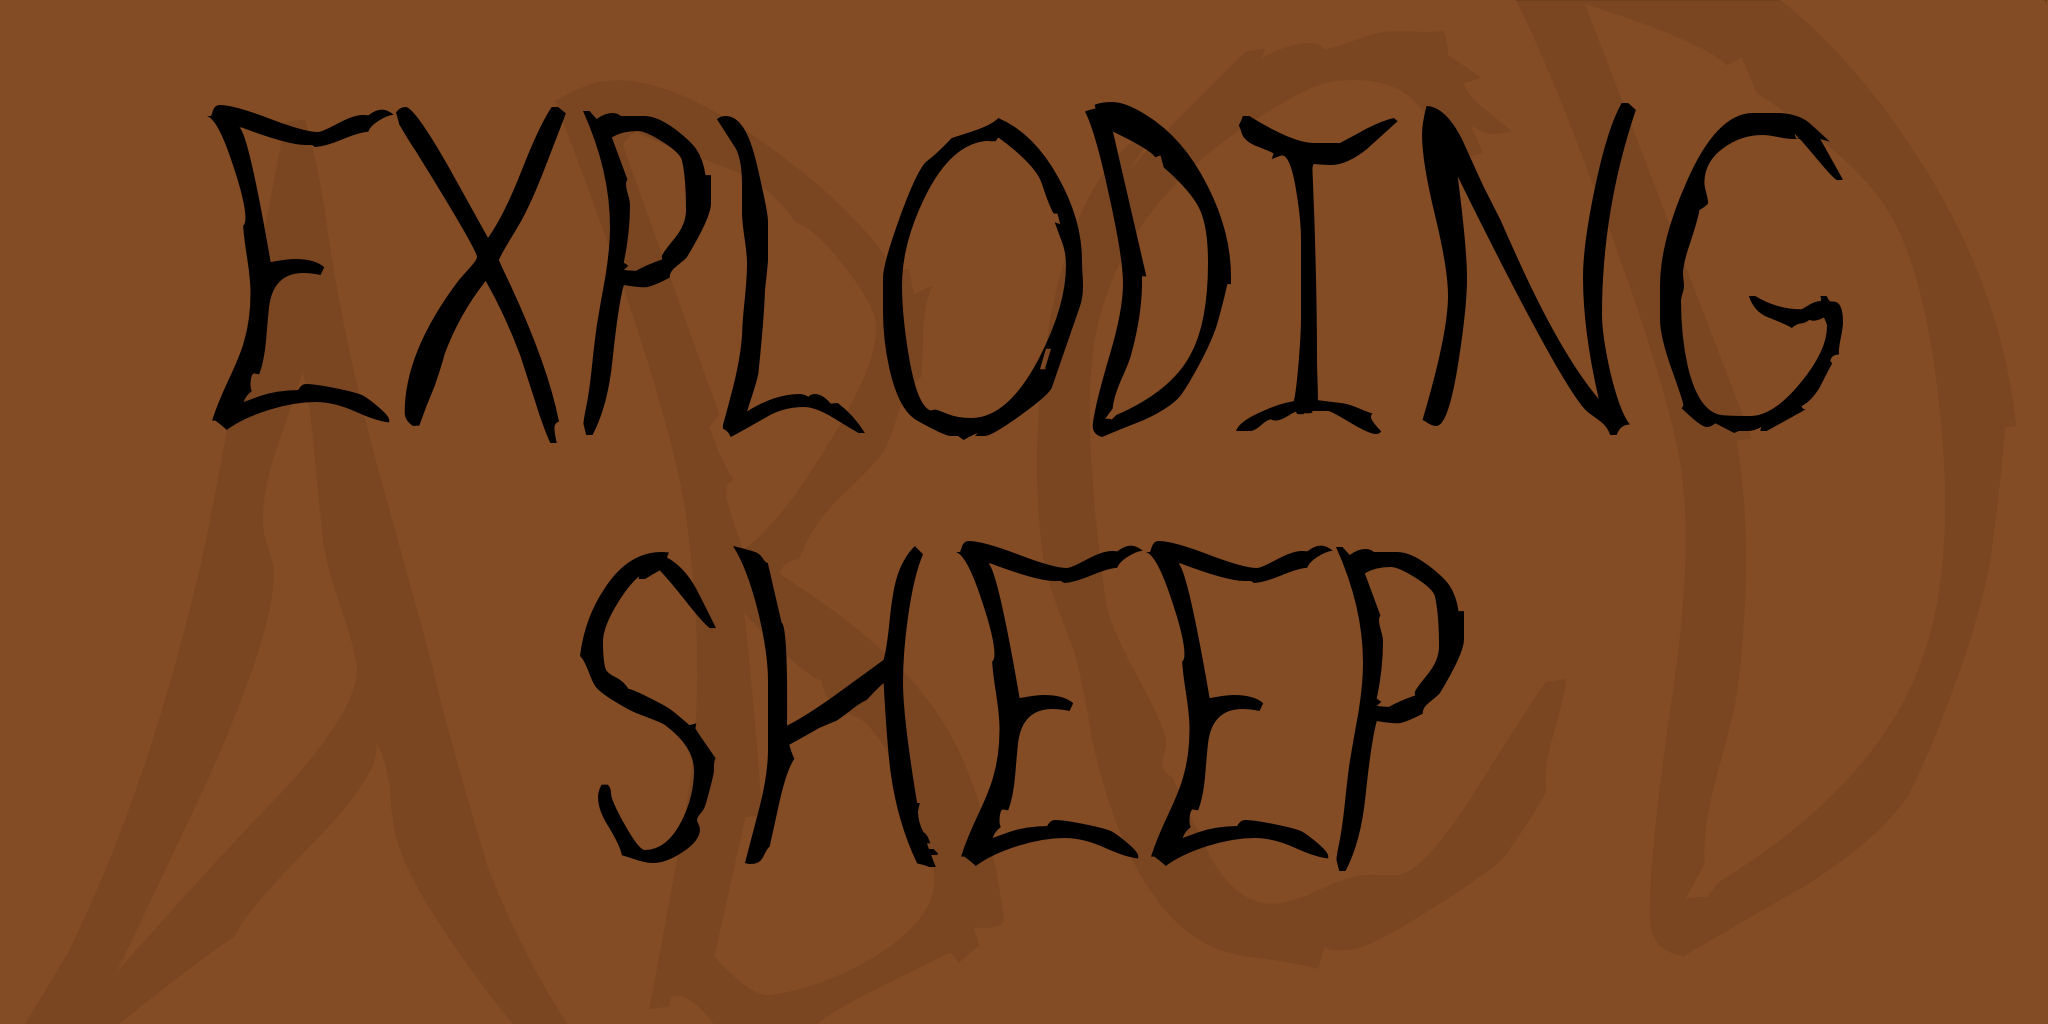 Exploding Sheep